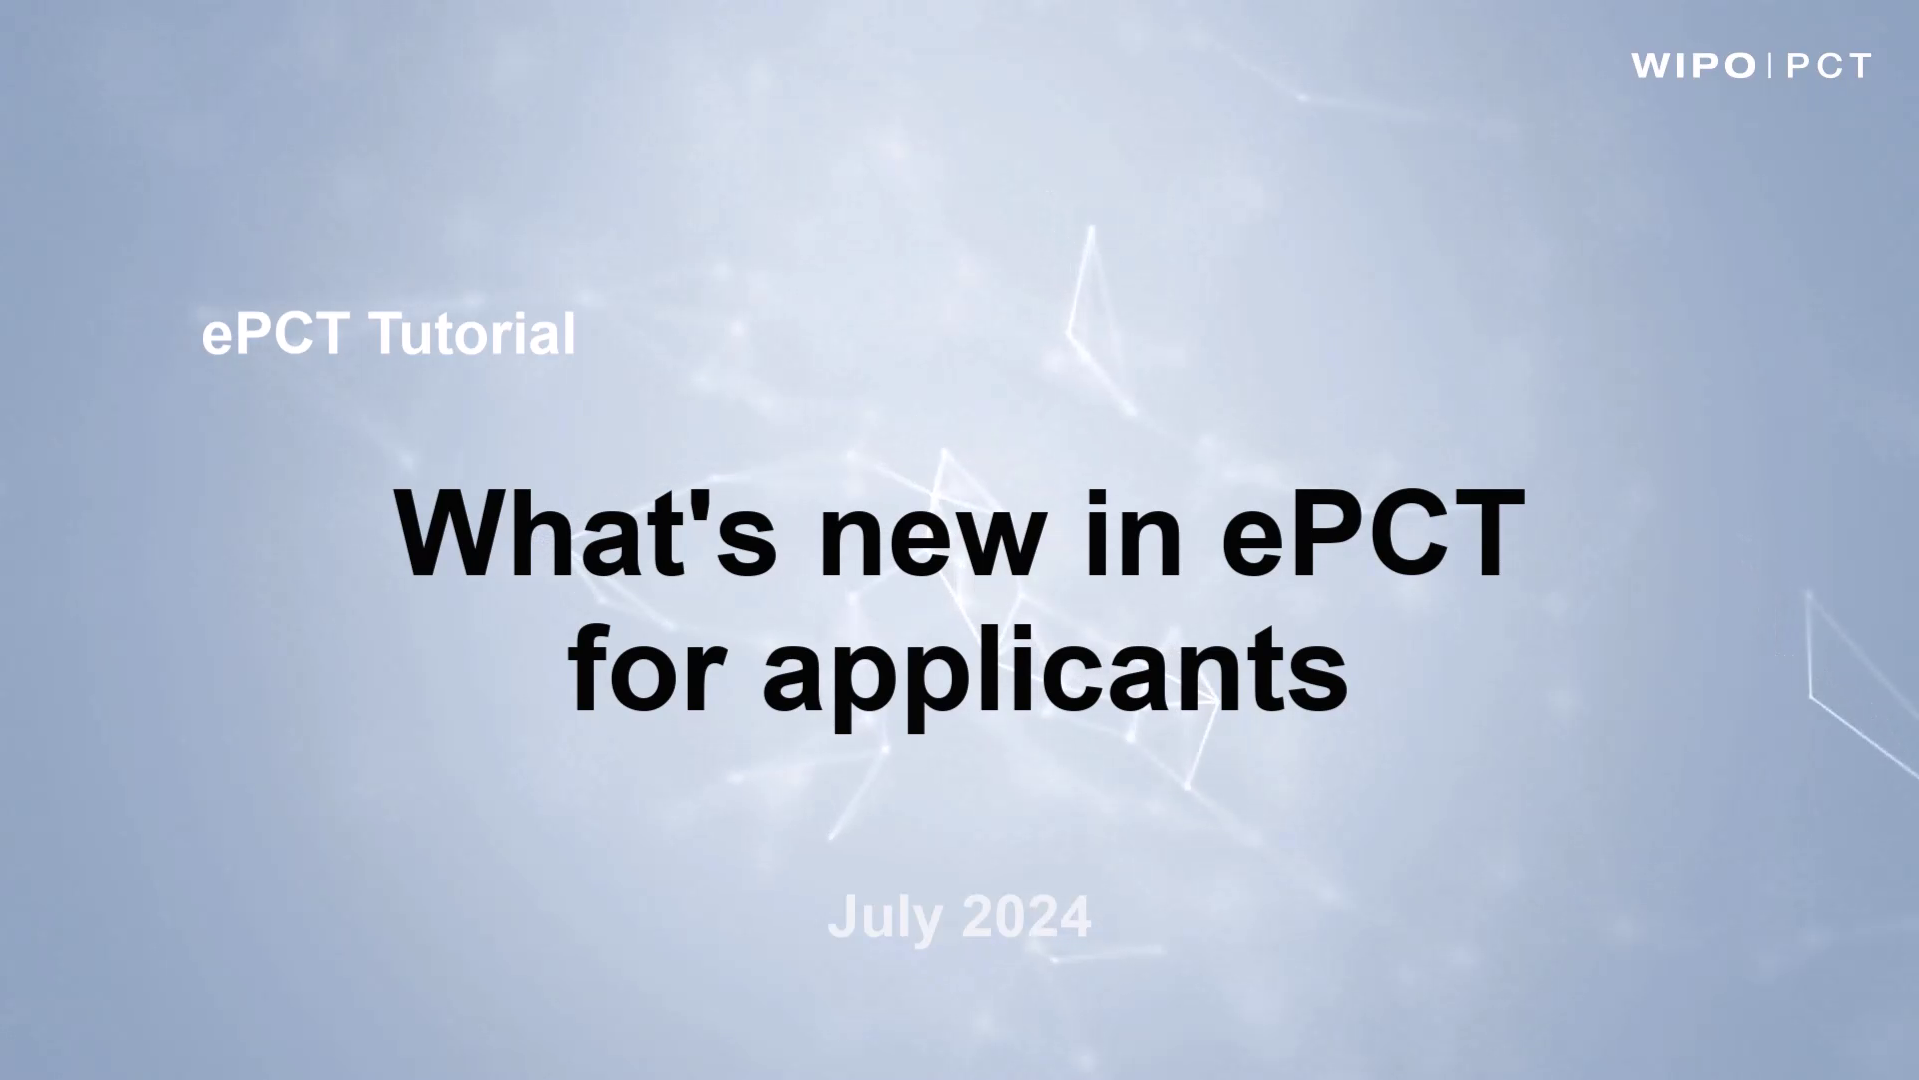 ePCT Video Tutorials for Applicants